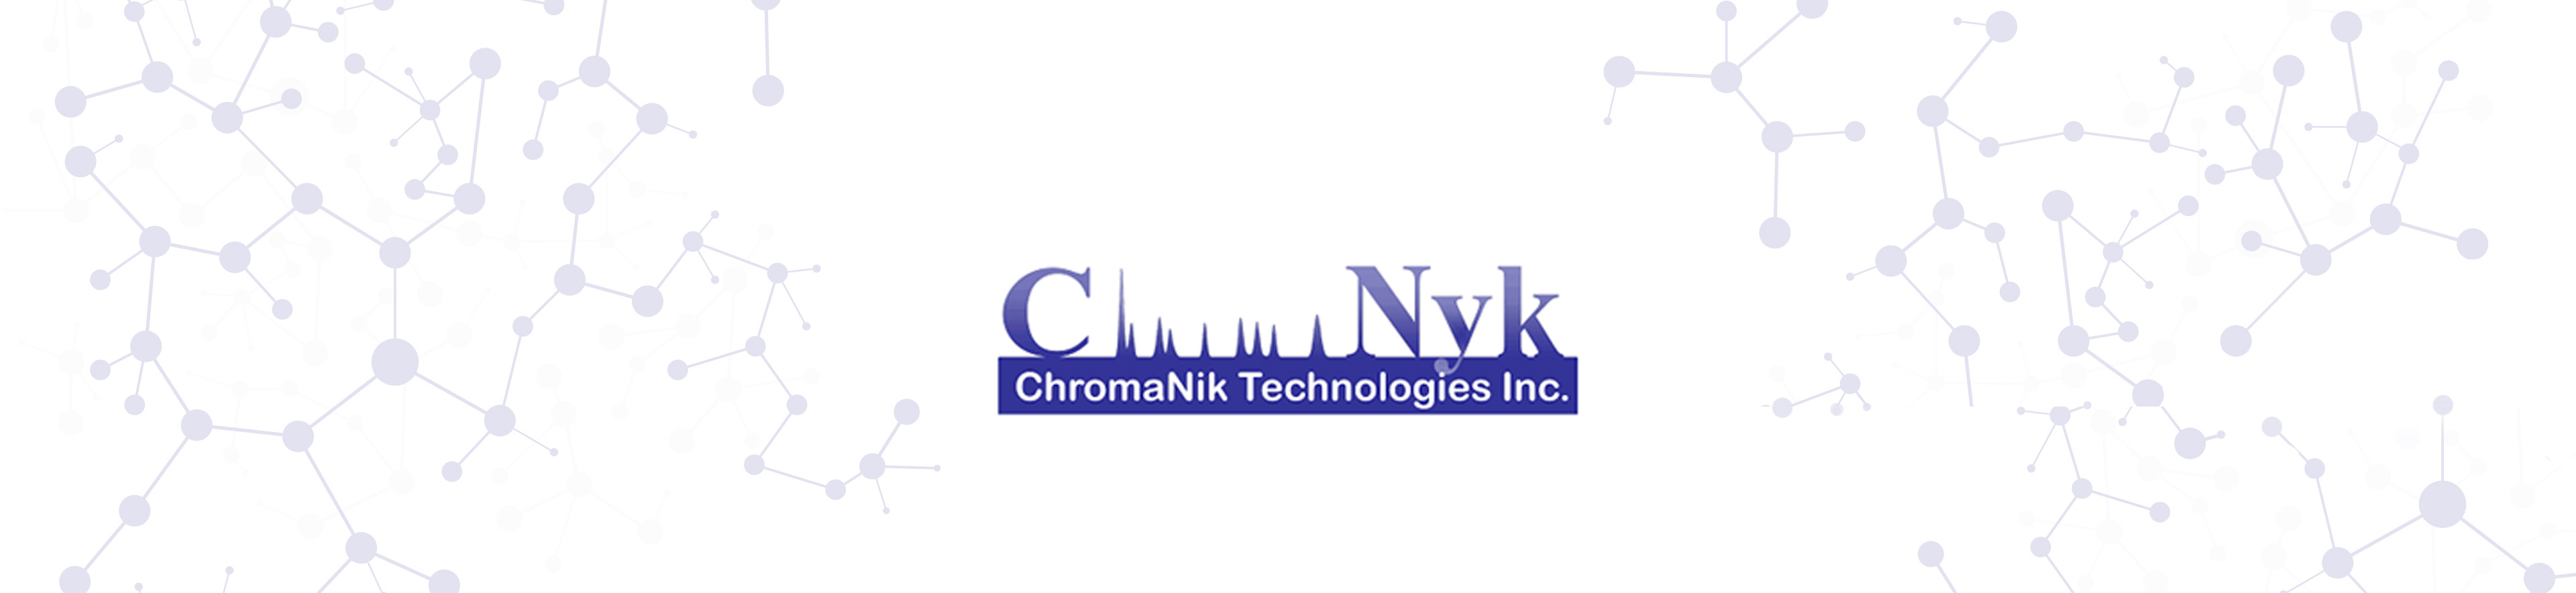 Chromanik Technologies